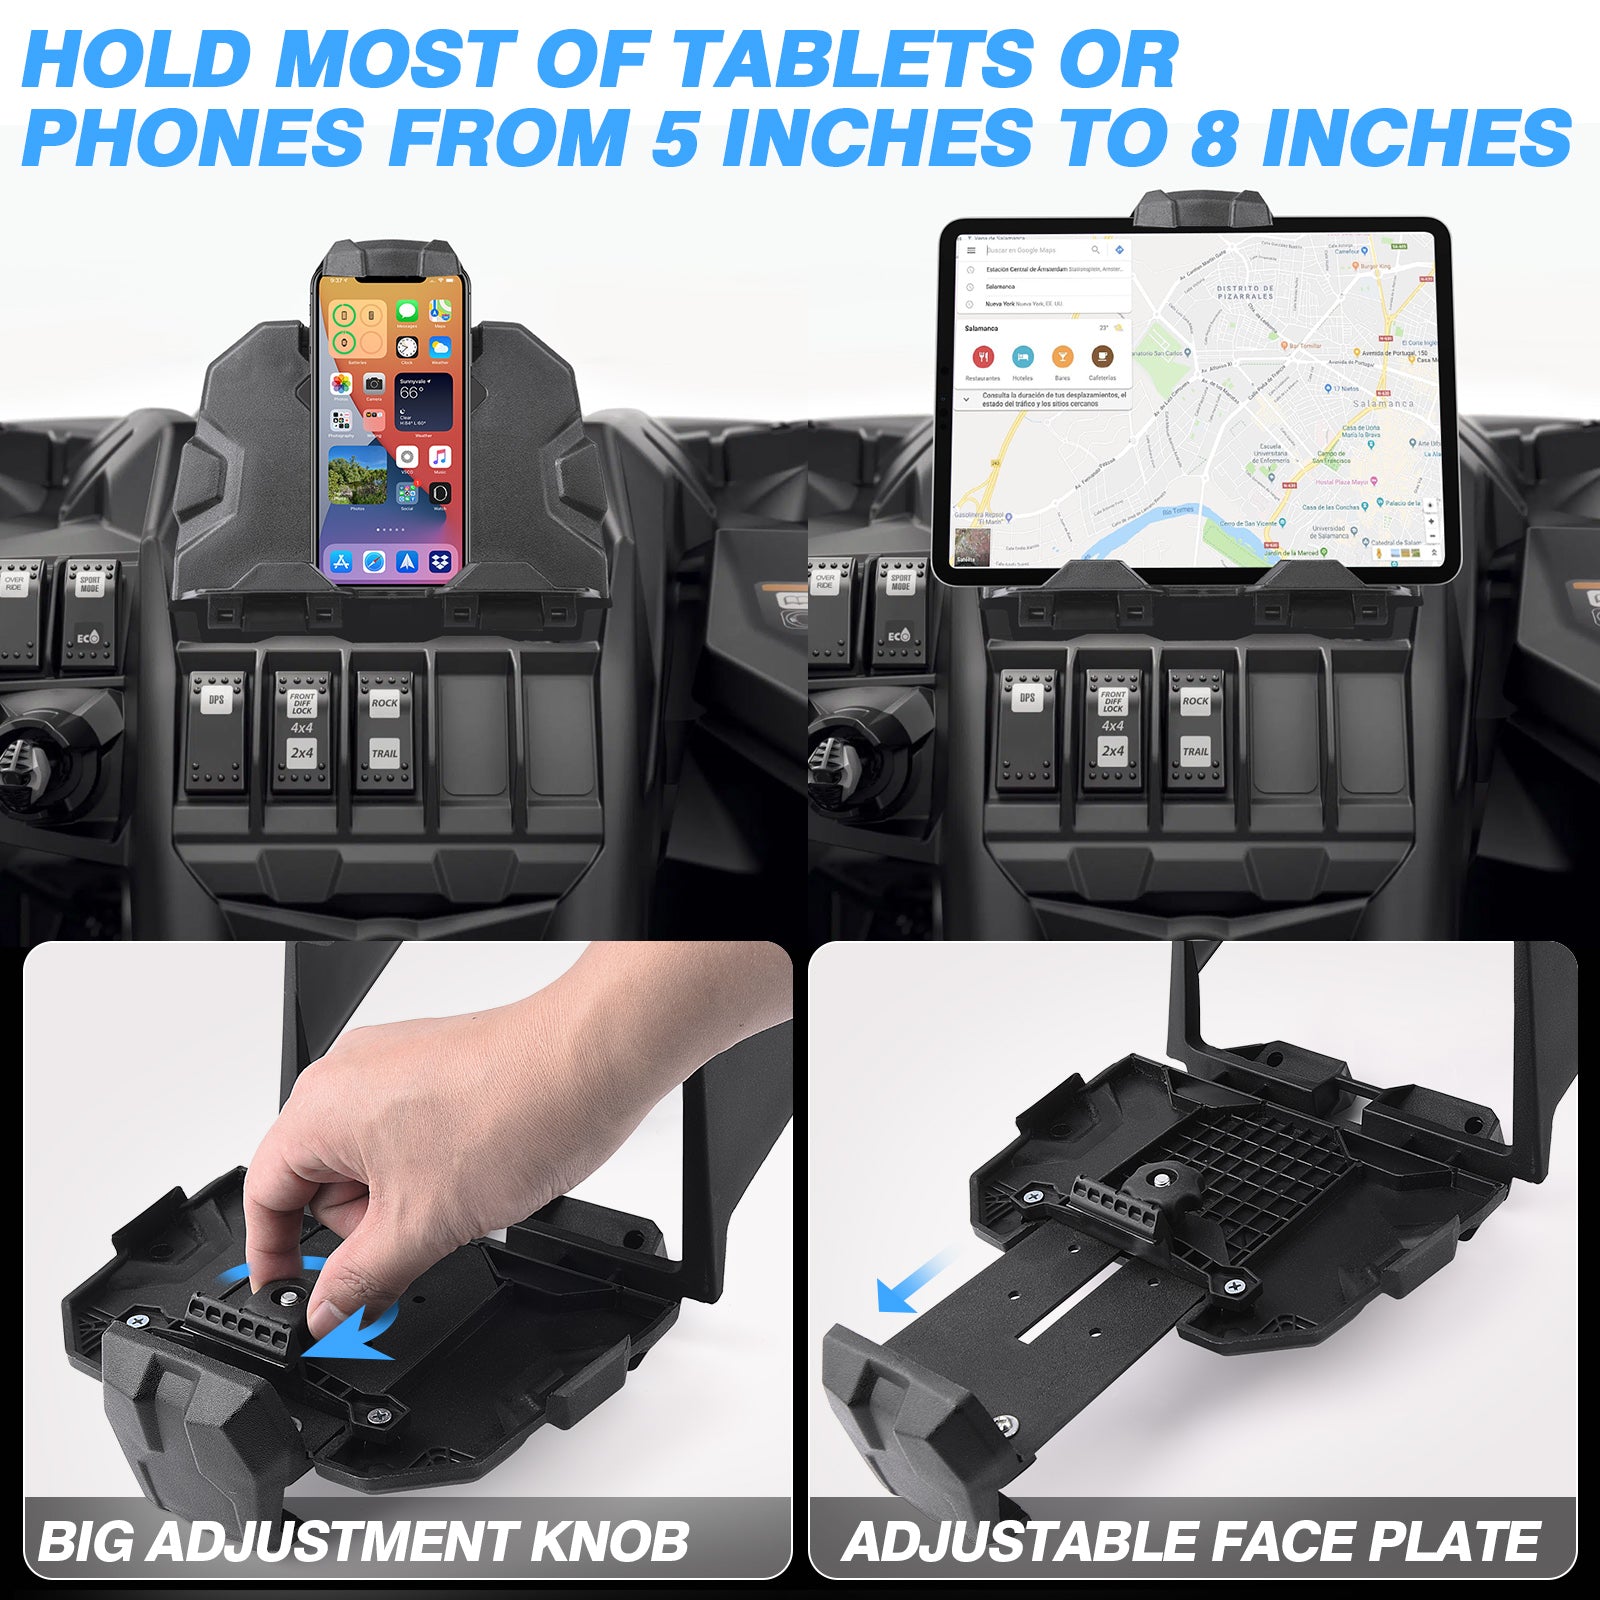 MICTUNING X3 Electronic Device Tablet Holder, Phone Ipad GPS Holder Storage Box Organizer